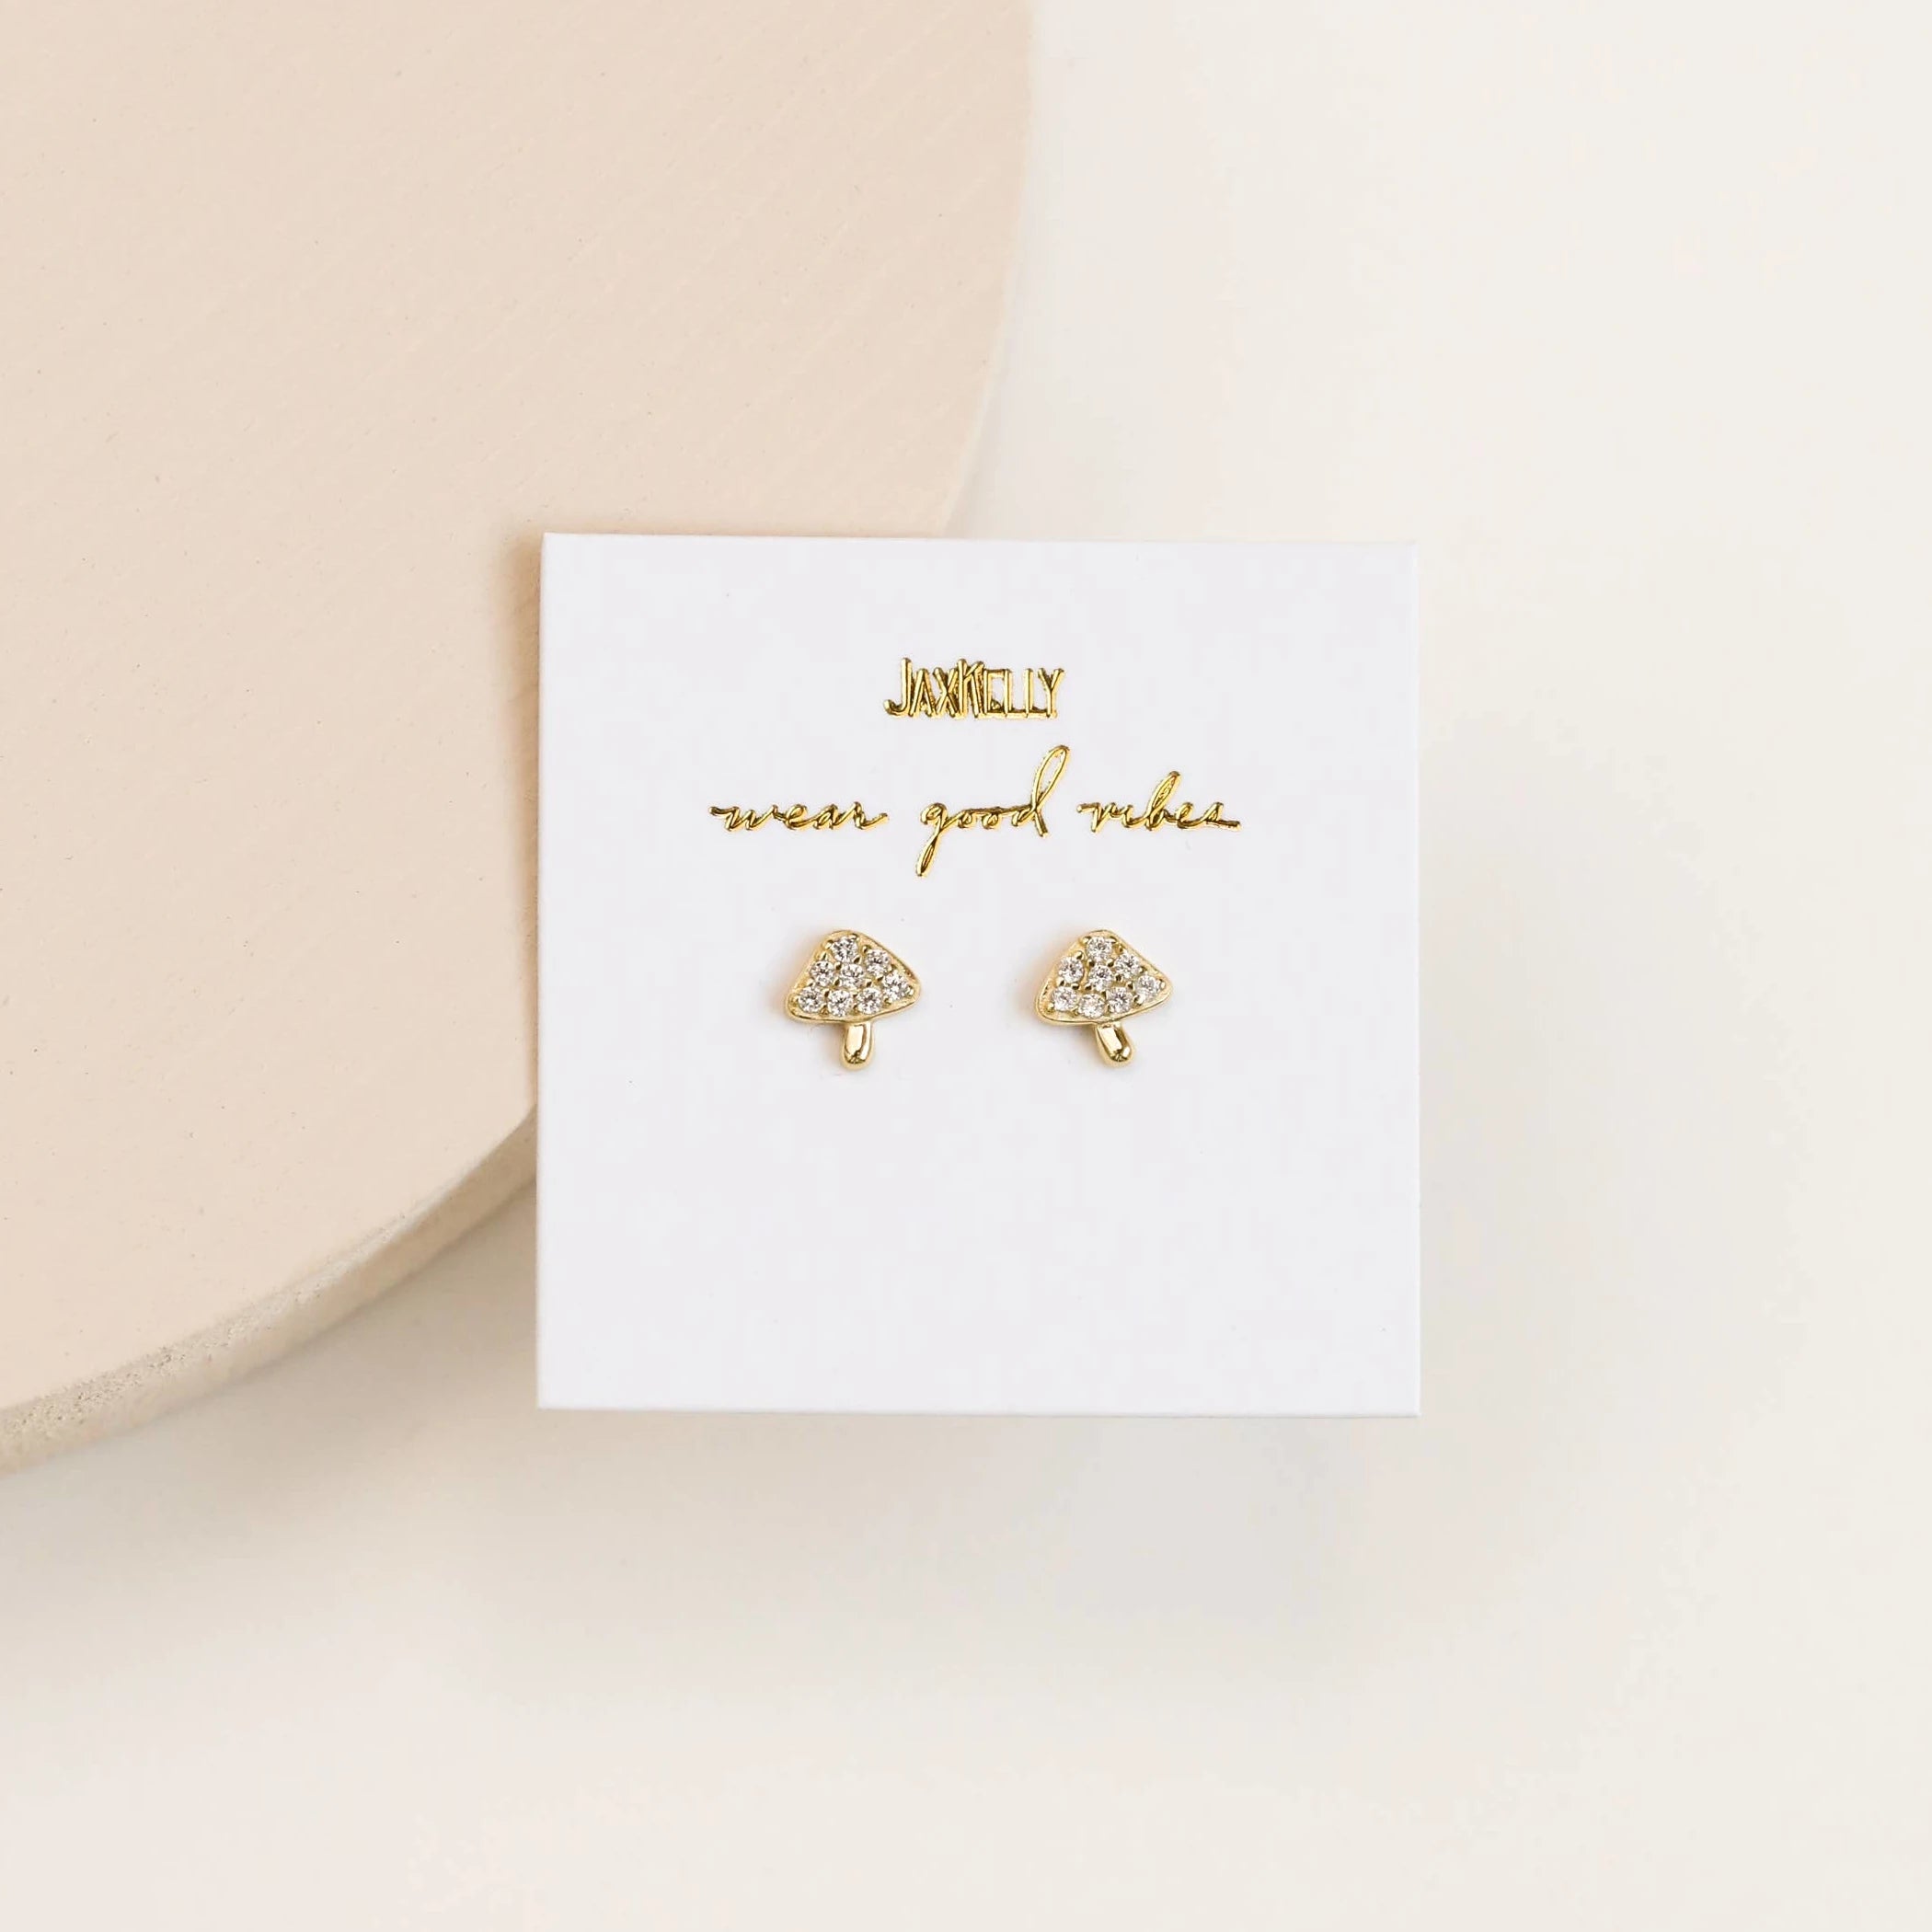 JaxKelly gold and cubic zirconia mushroom stud earrings. 